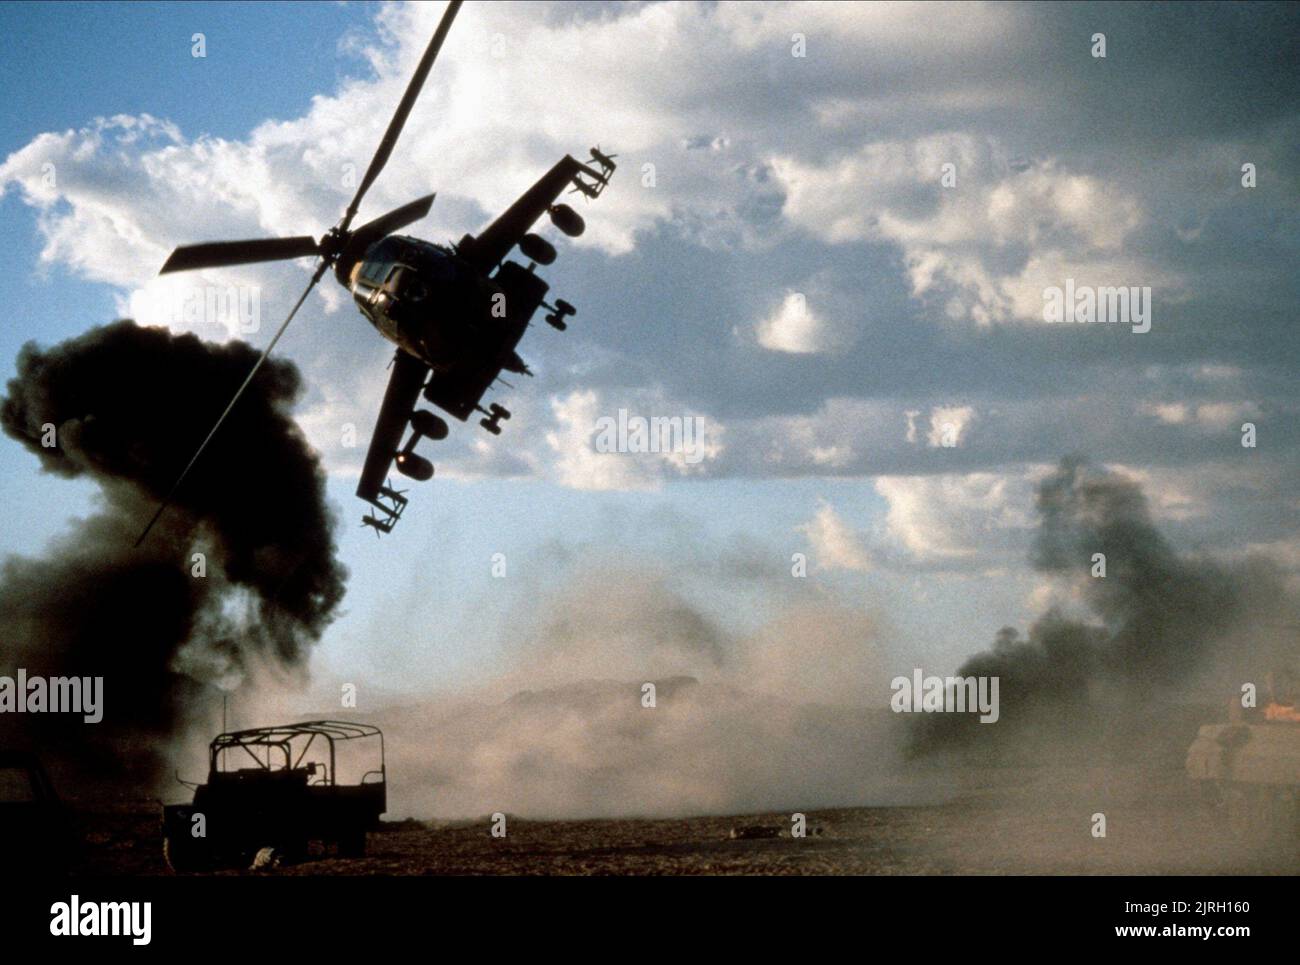 Attaque de l'hélicoptère de la base afghane, Rambo III, 1988 Banque D'Images